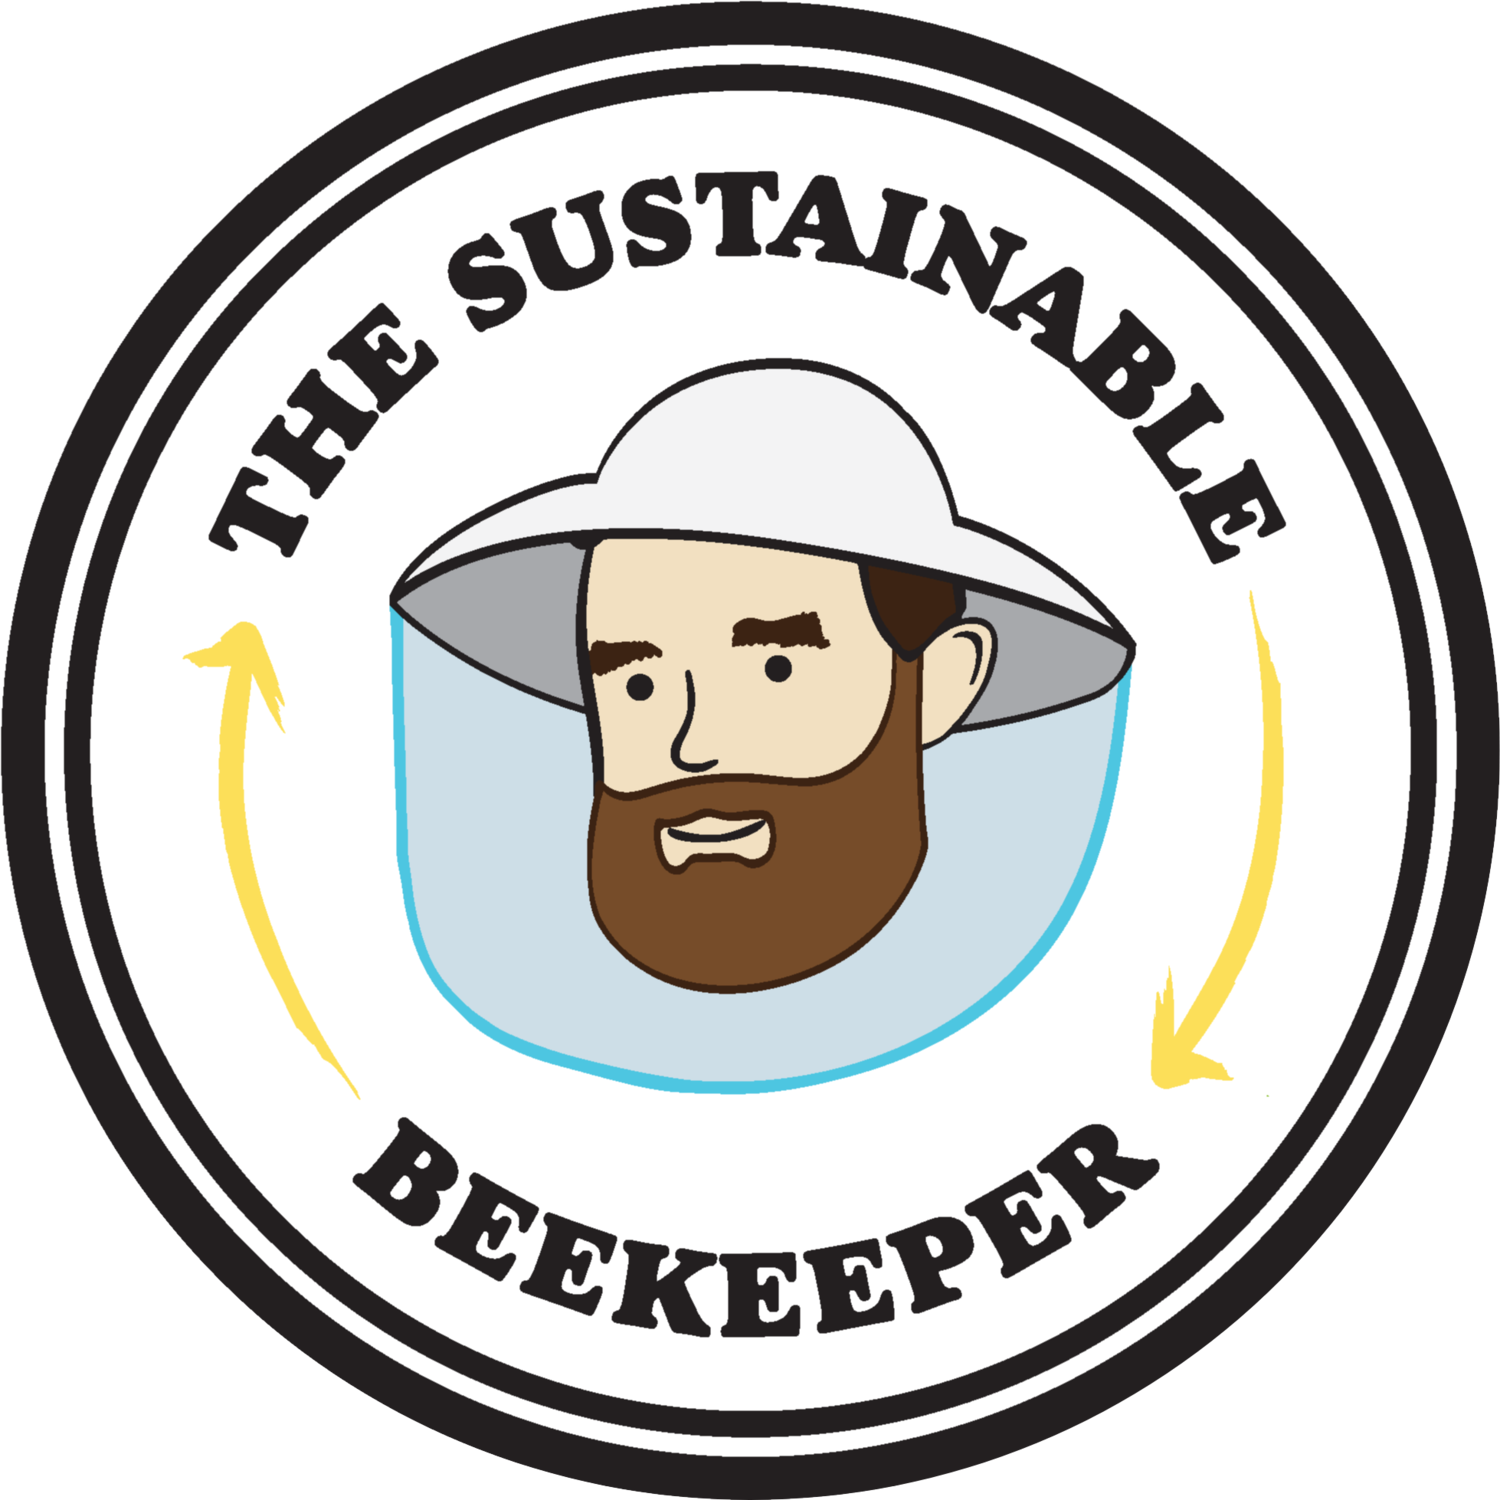 The Sustainable Beekeeper